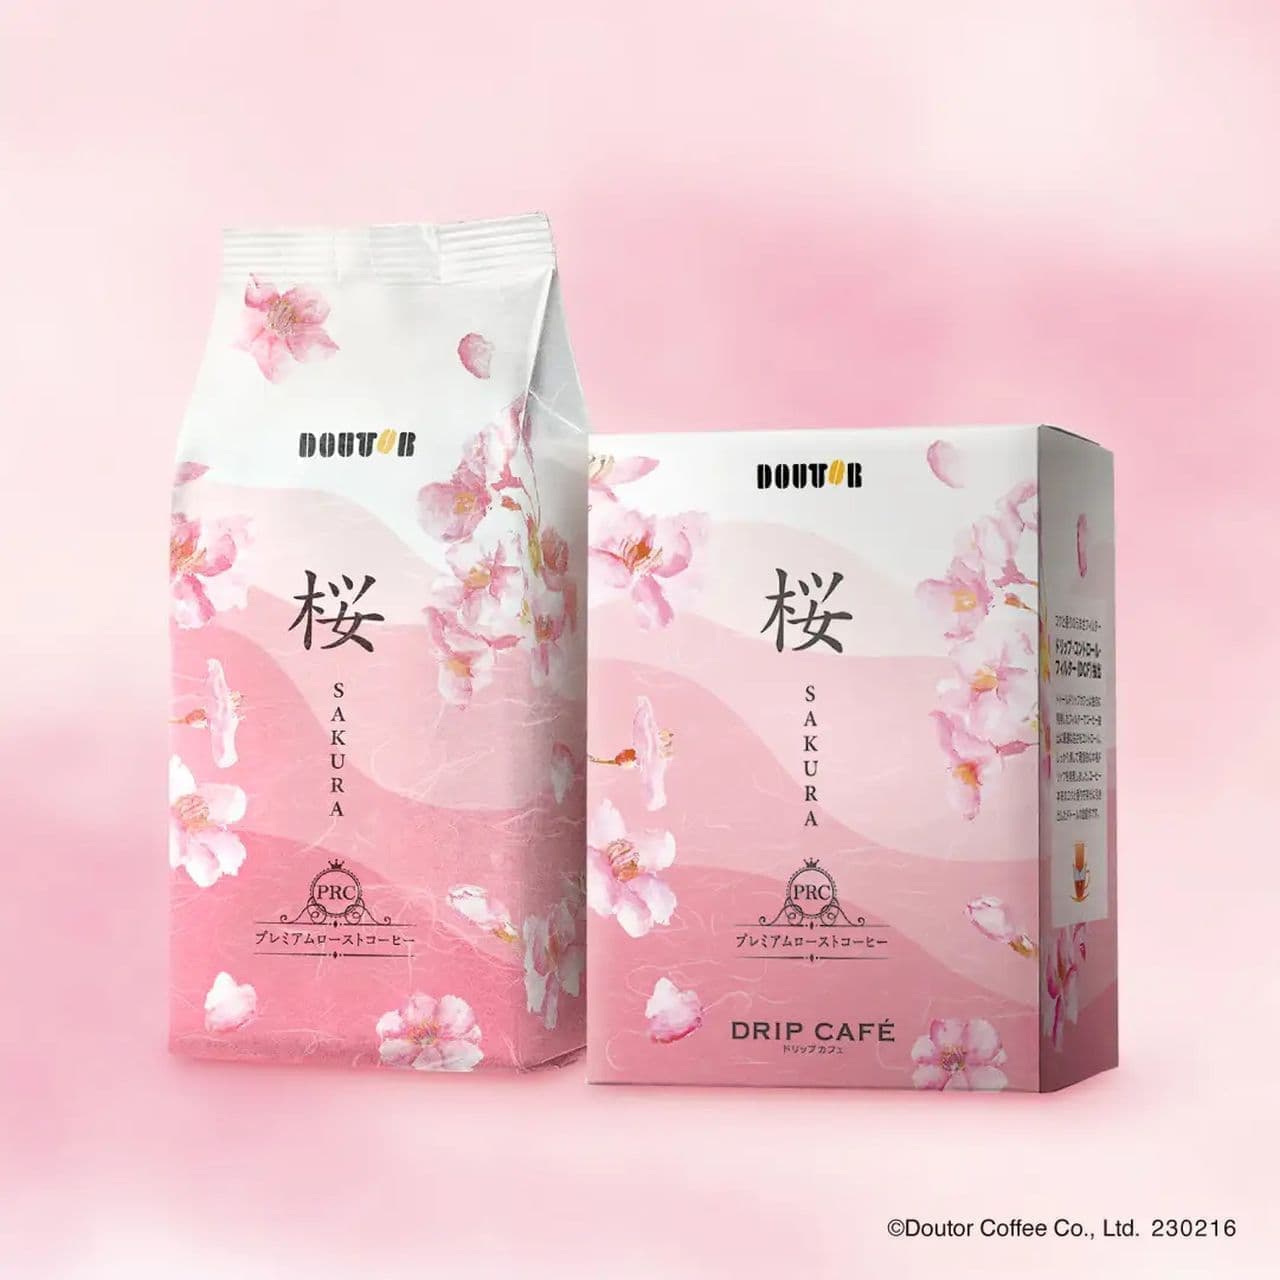 Doutor Coffee Shop "Premium Roast Coffee Sakura